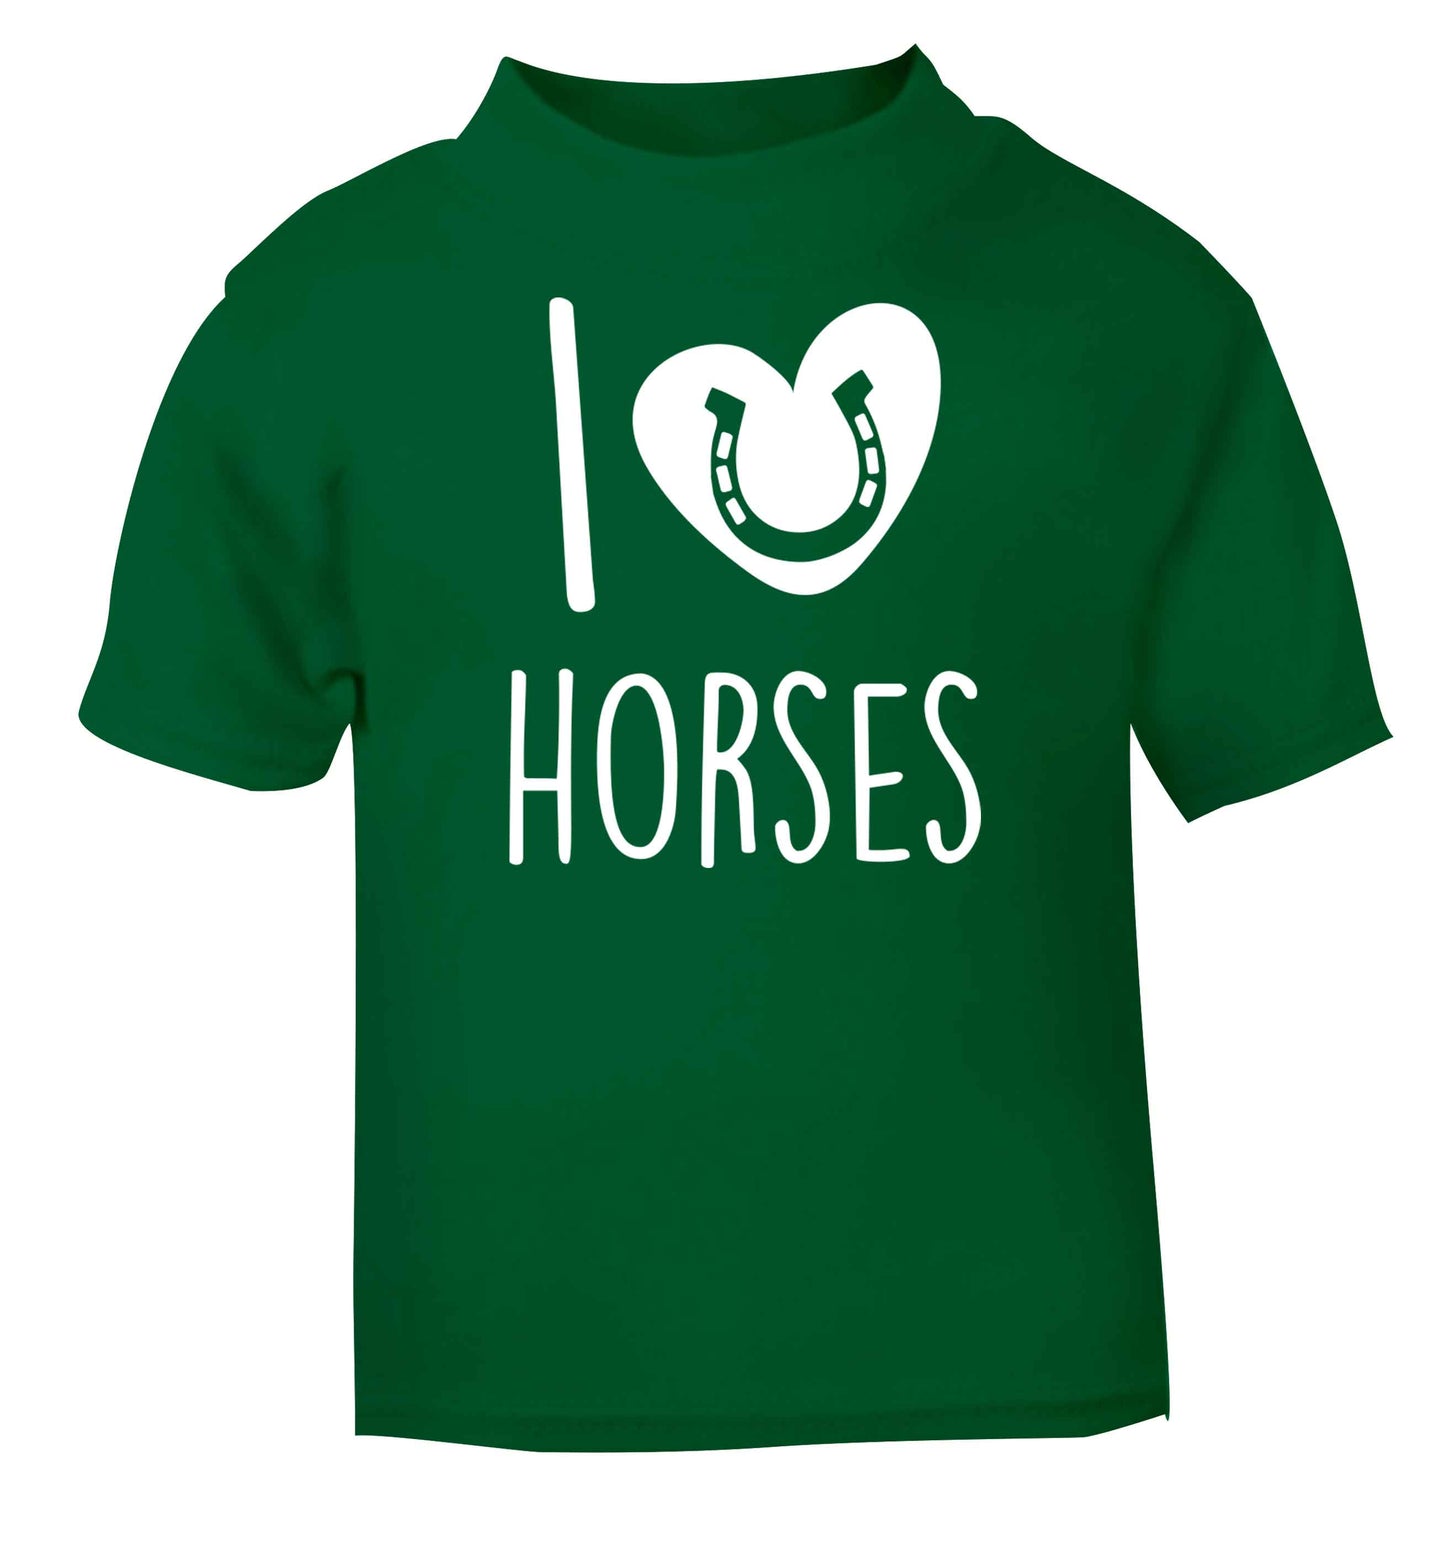 I love horses green baby toddler Tshirt 2 Years